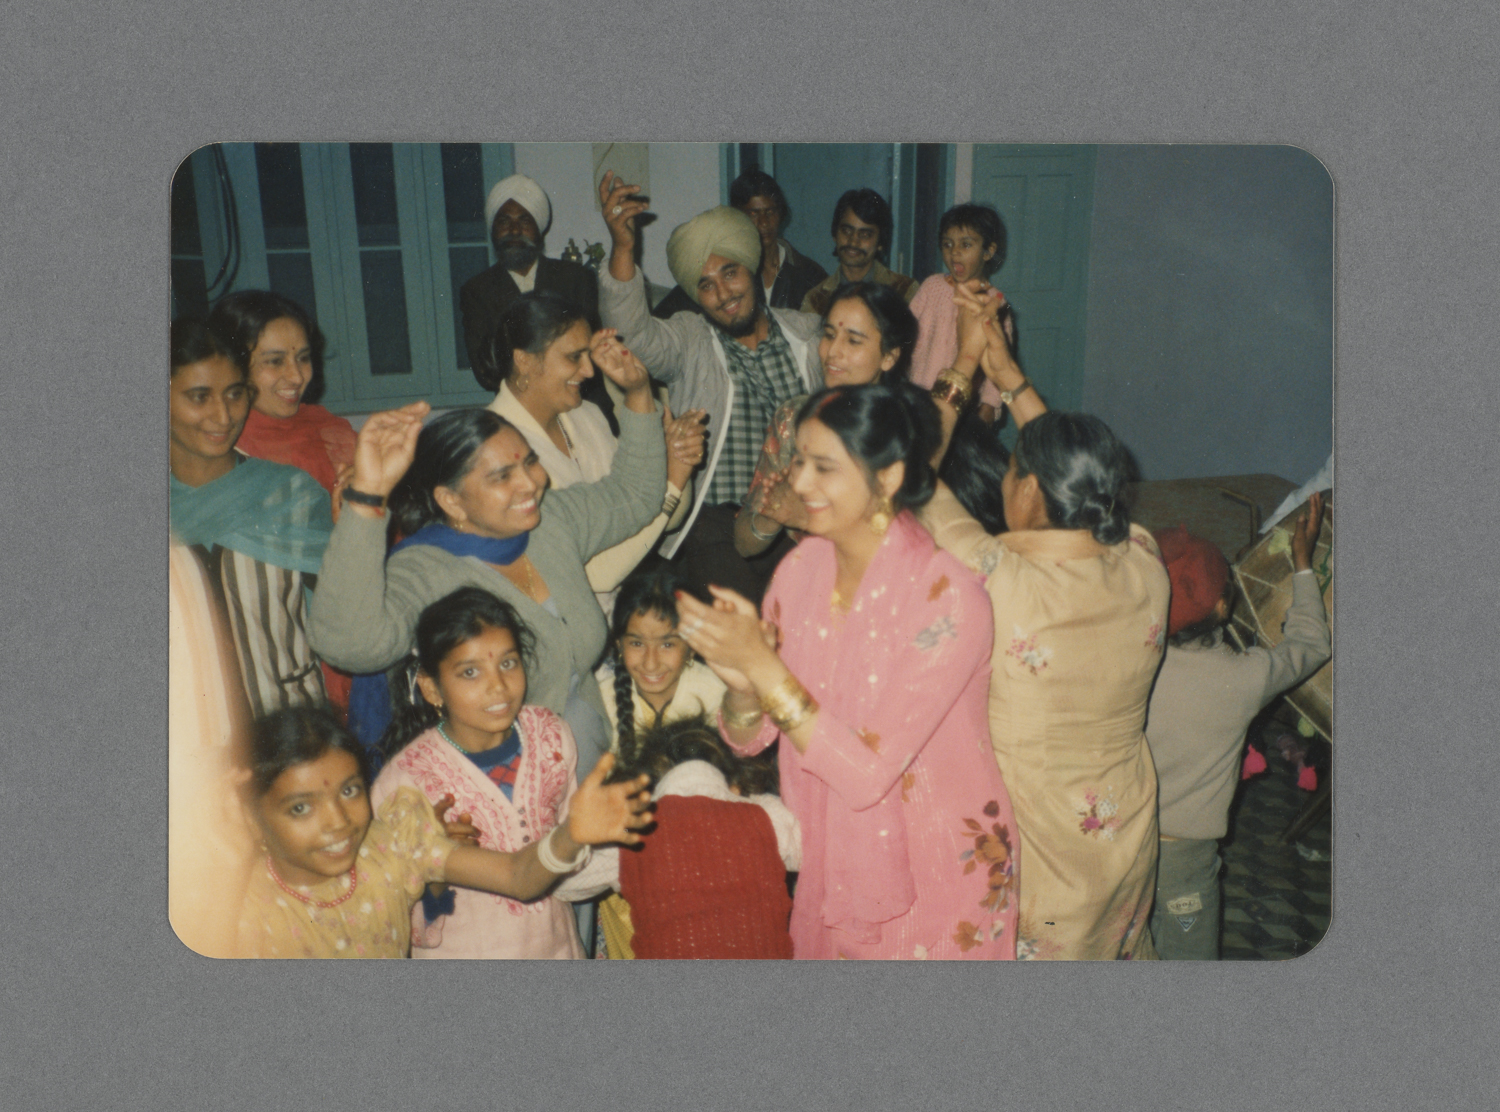 Punjab, India c.1985